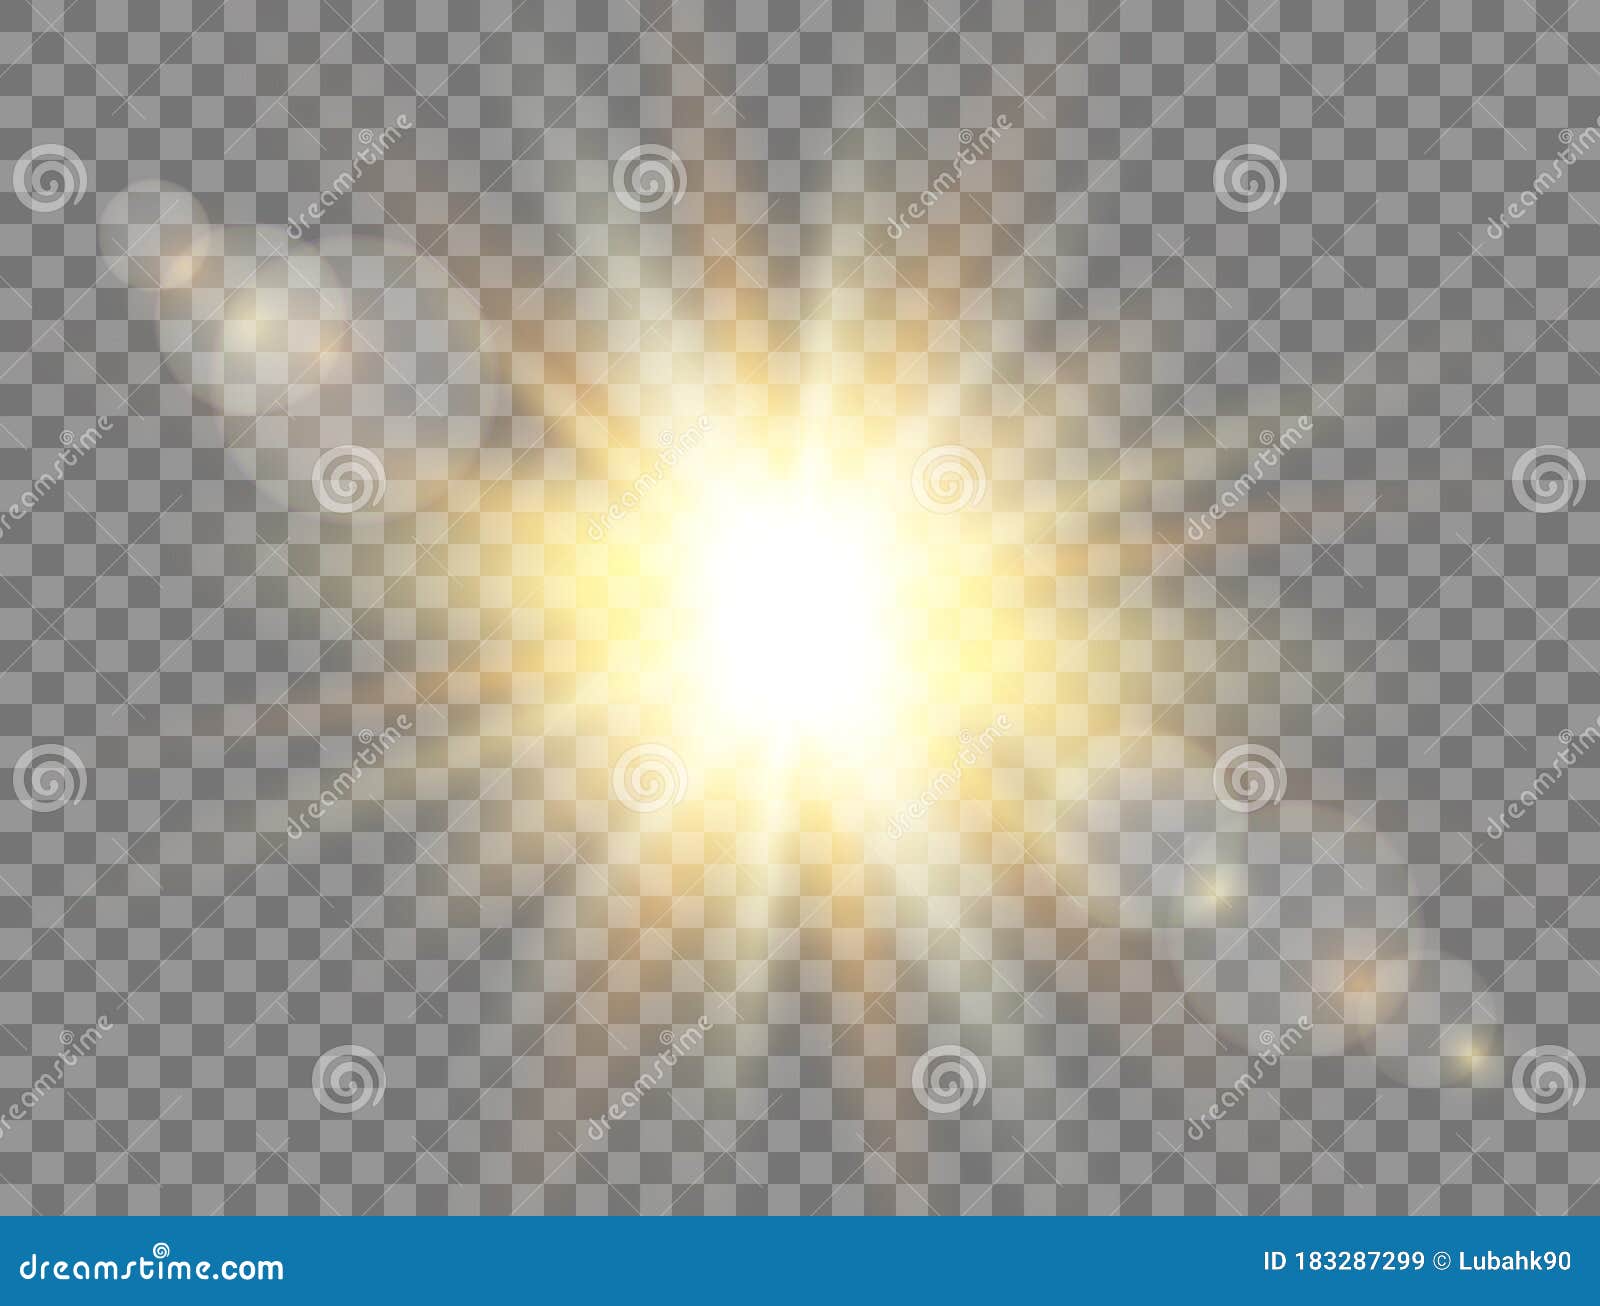 sunshine with rays on transparent background. sun light. golden glowing light effect. sunlight lens flash. magic banner